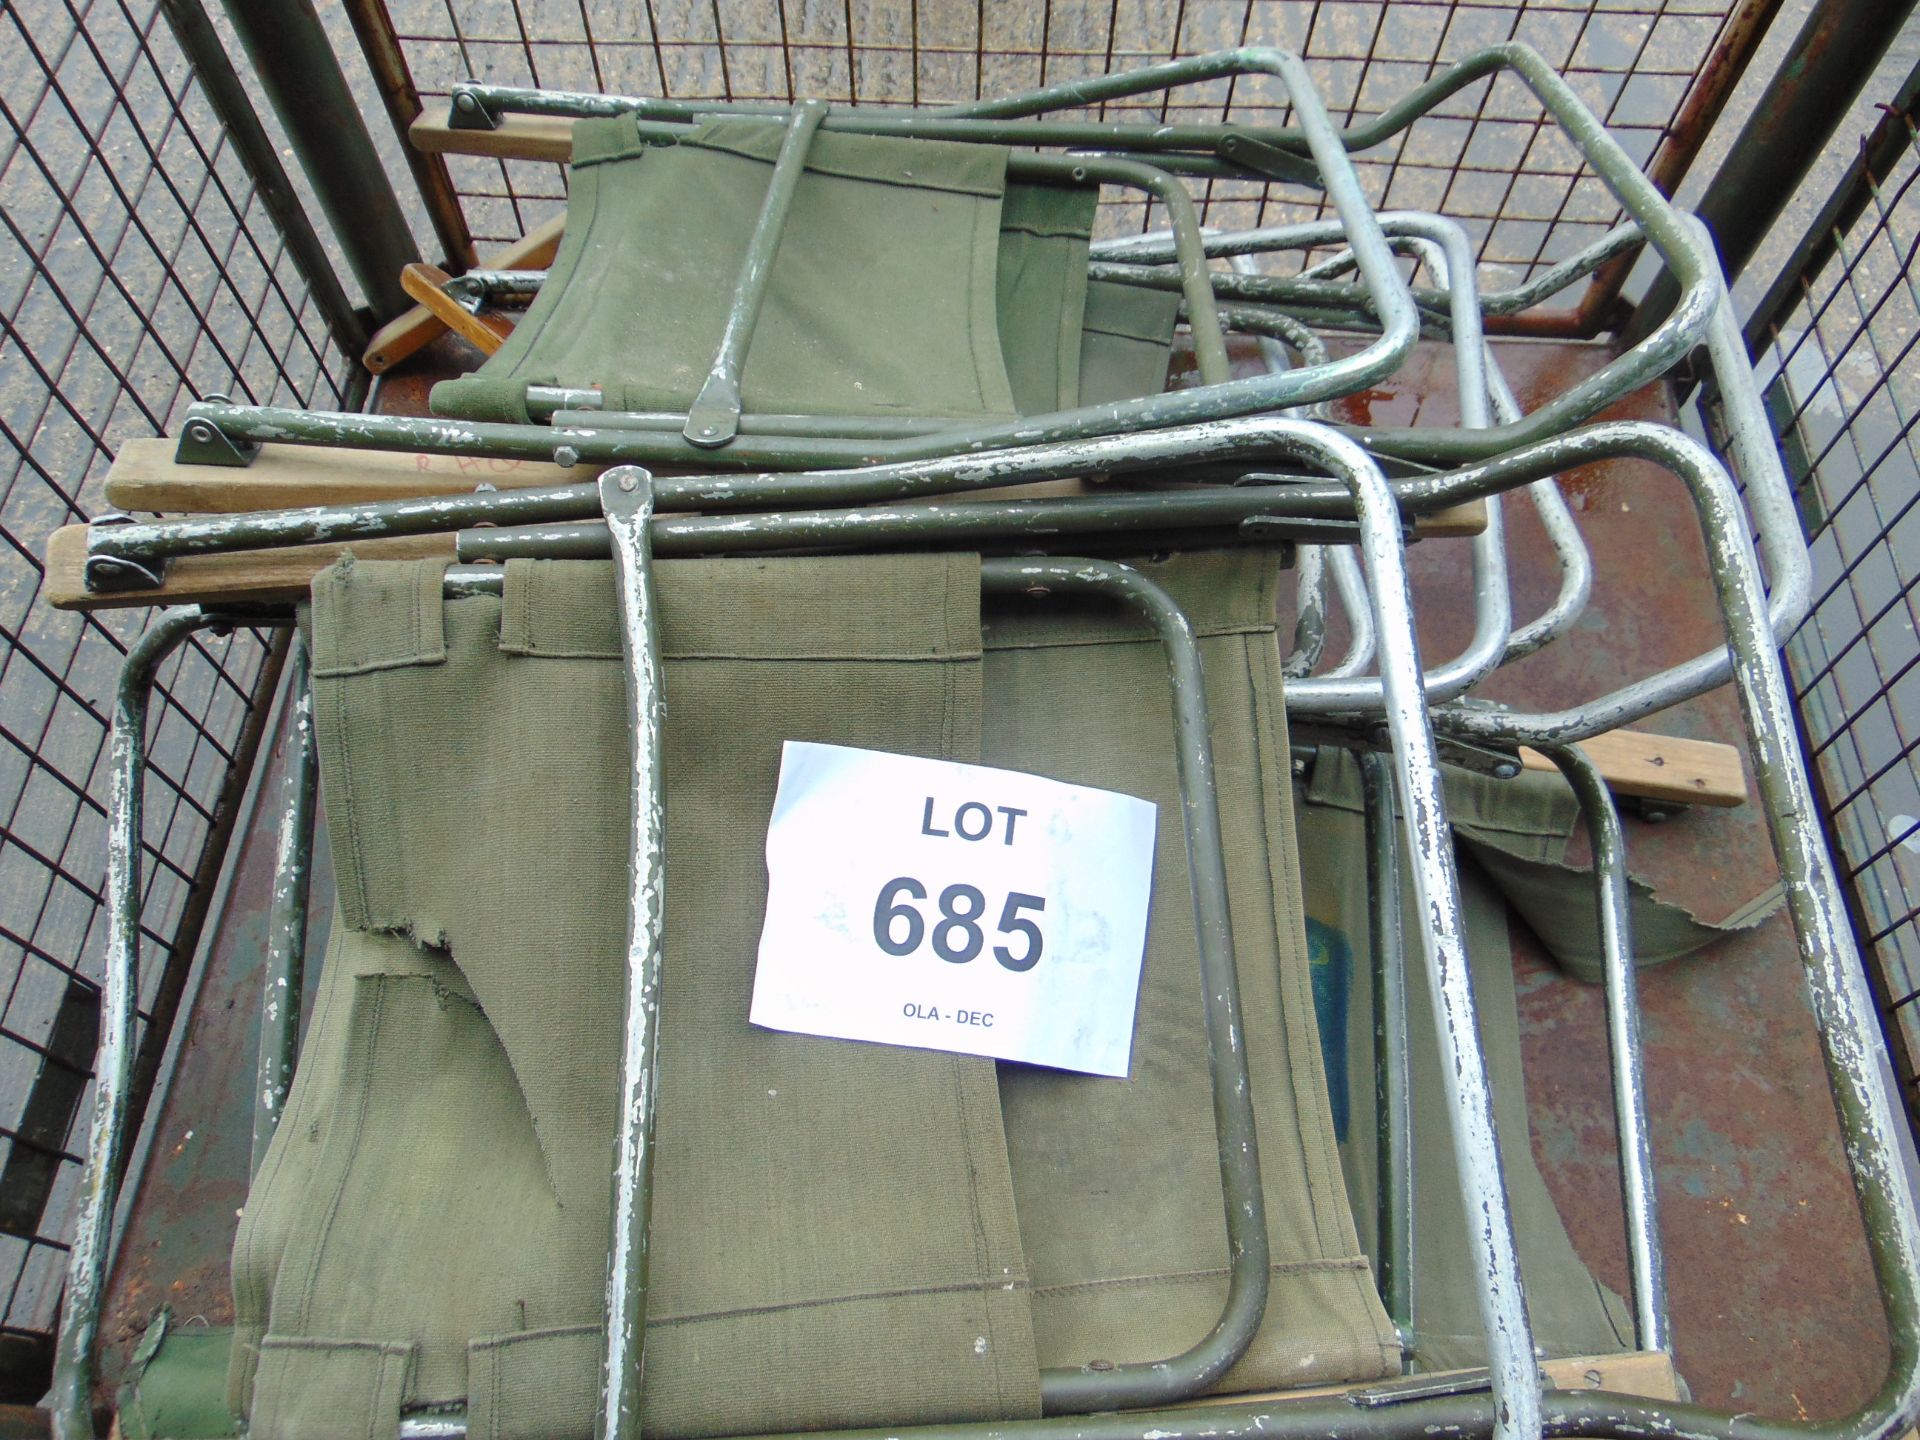 7 x Standard British Army Campin Chairs